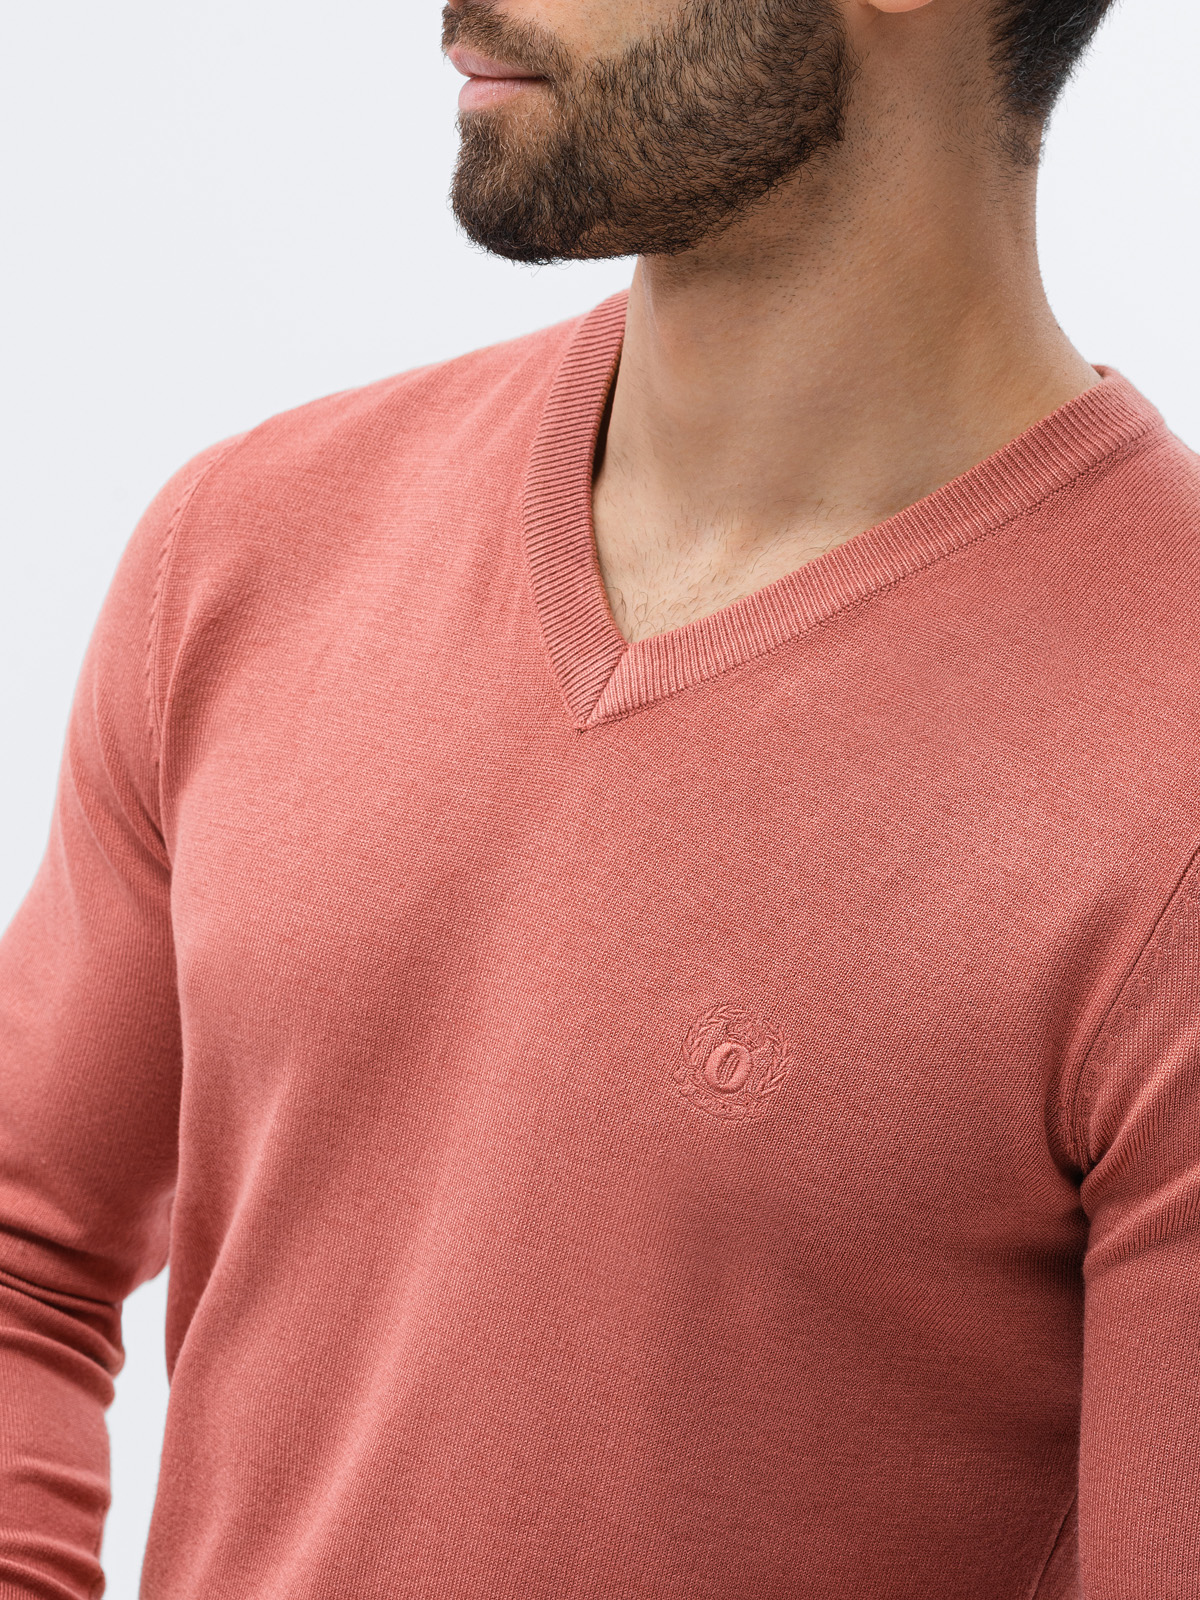 Italian Style Heren Kleding Truien & Vesten Truien Sweaters Herensweater E191 roze maat S 